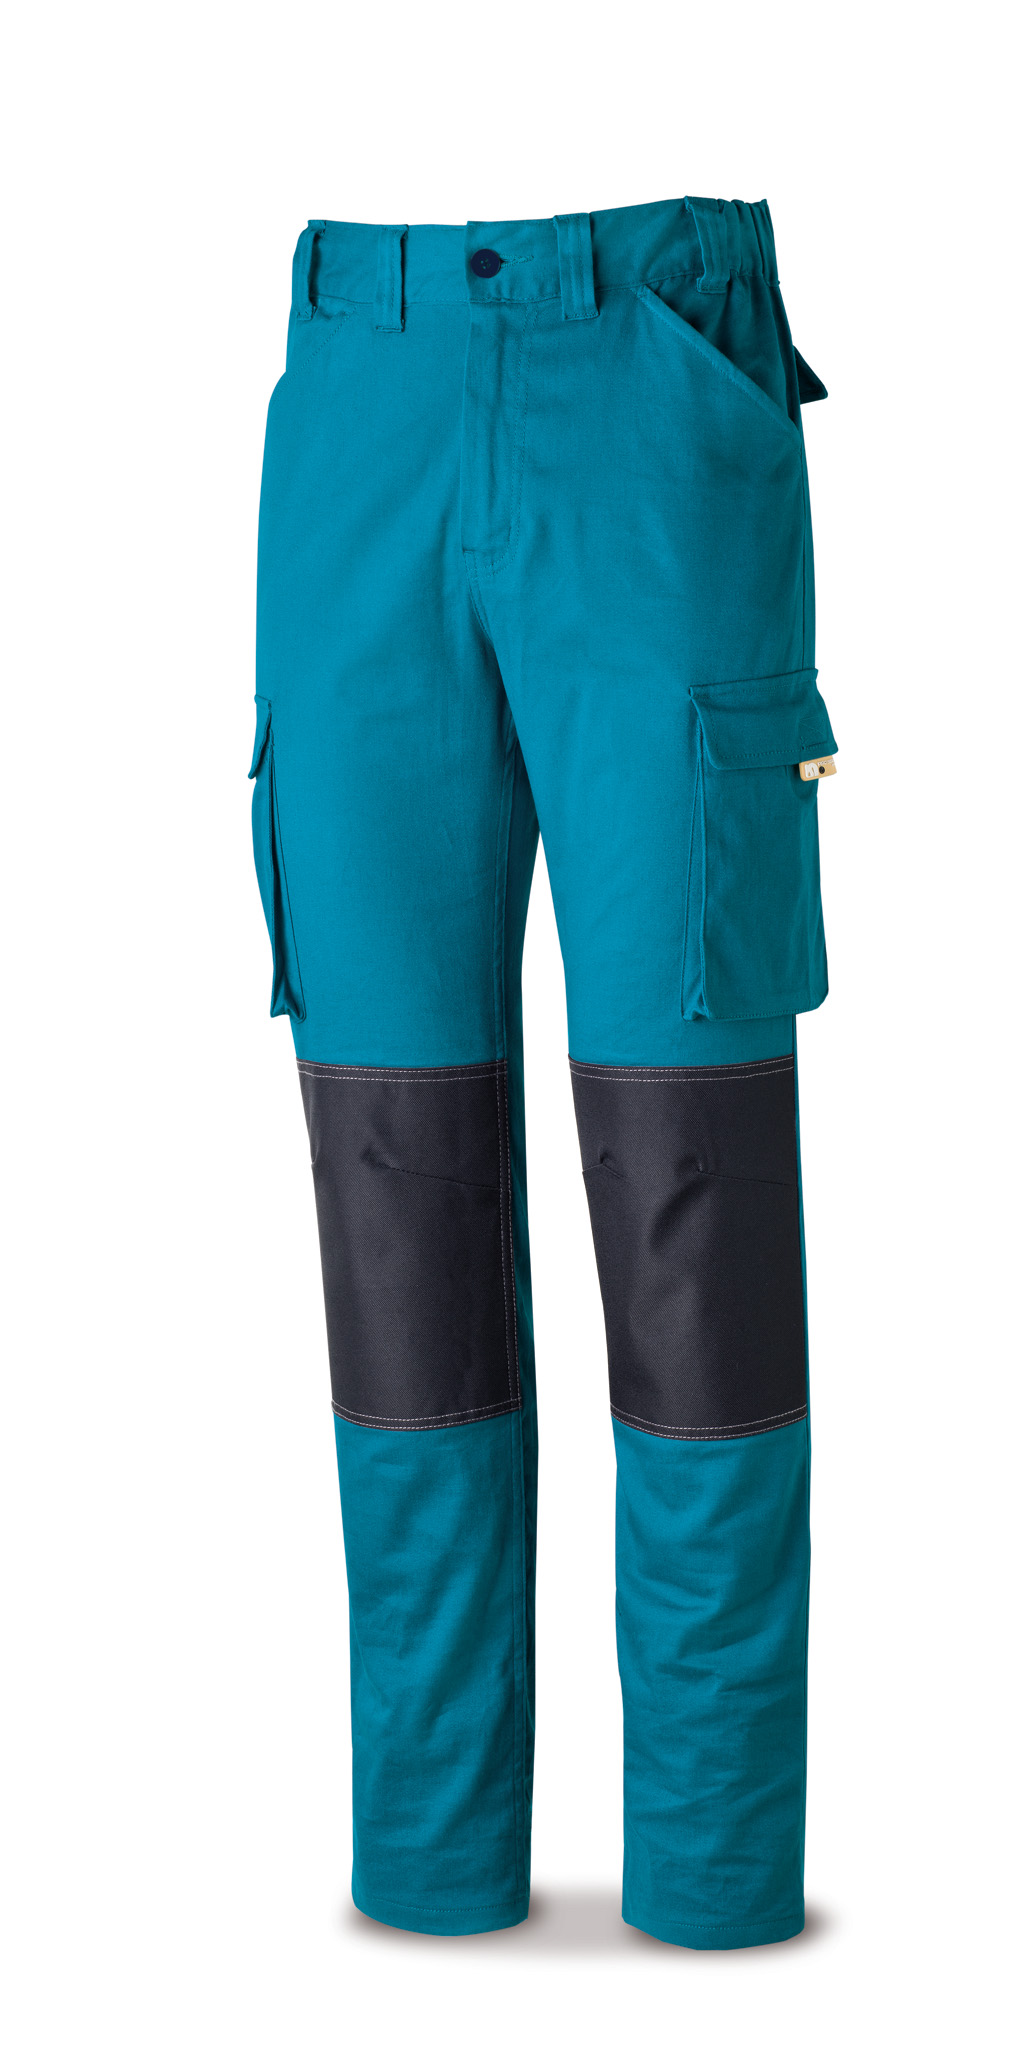 588-PSTRAE Vestuario Laboral Pro Series Pantalón STRETCH Pro Series azul eléctrico algodón. 220 gr. Multibolsillos